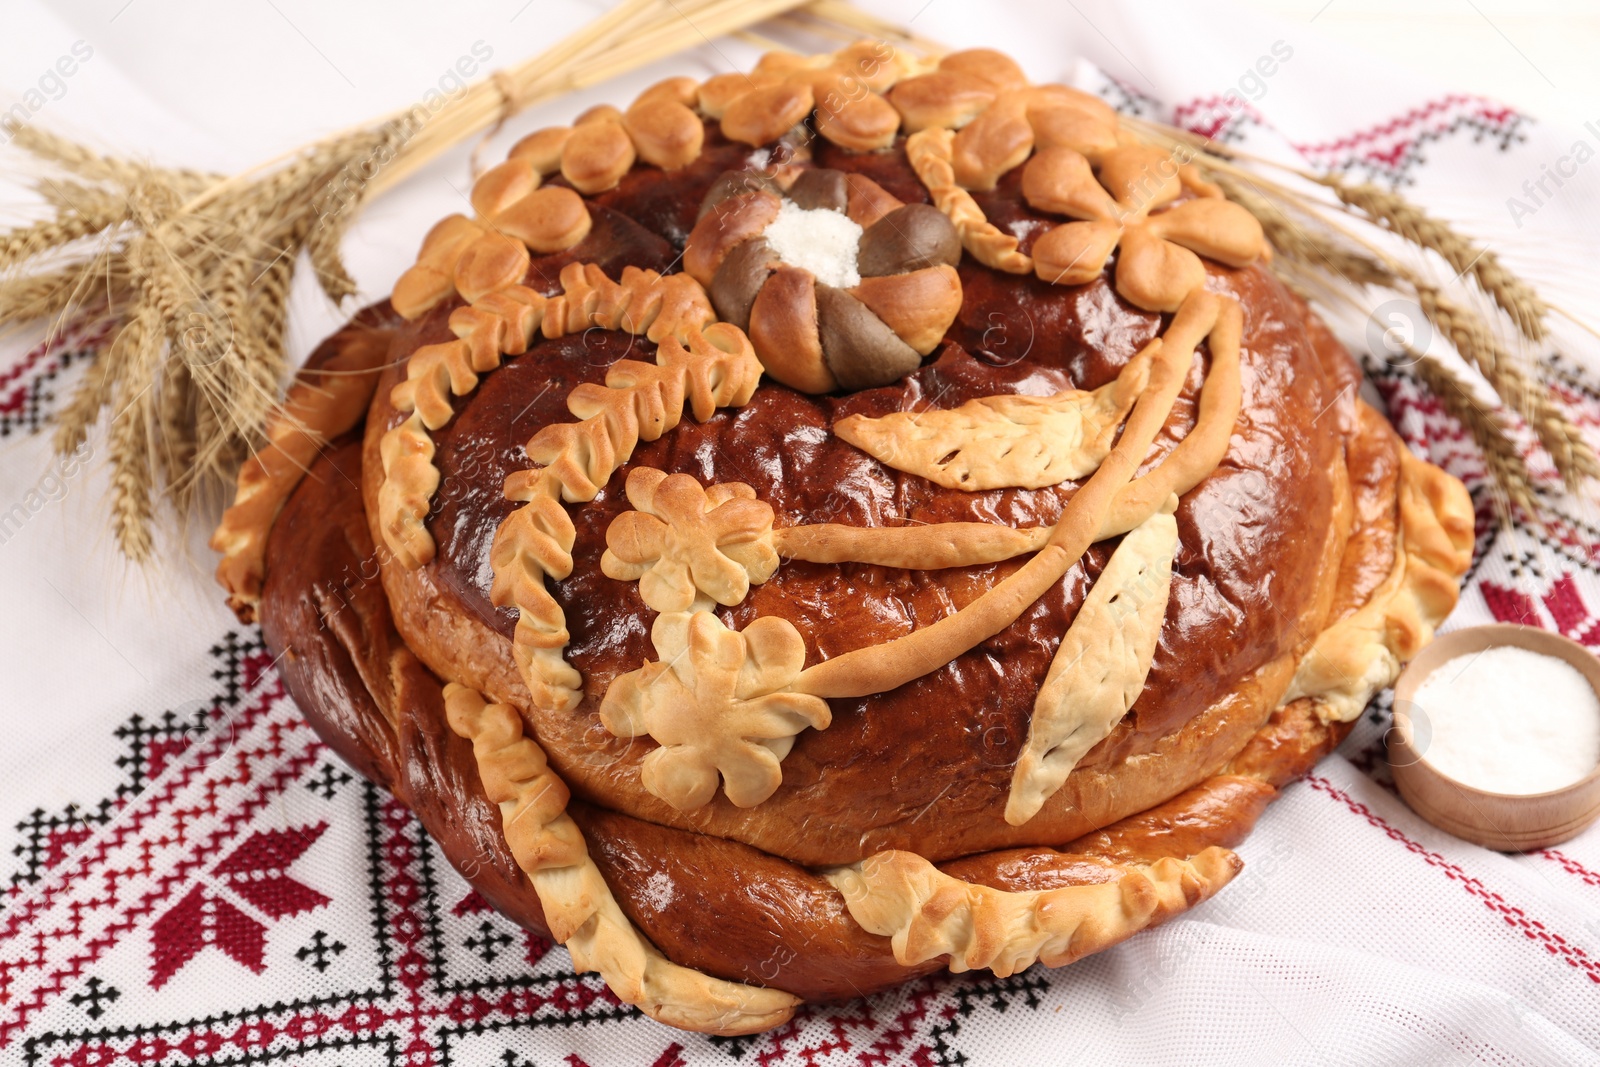 Photo of Korovai with wheat spikes on rushnyk, closeup. Ukrainian bread and salt welcoming tradition